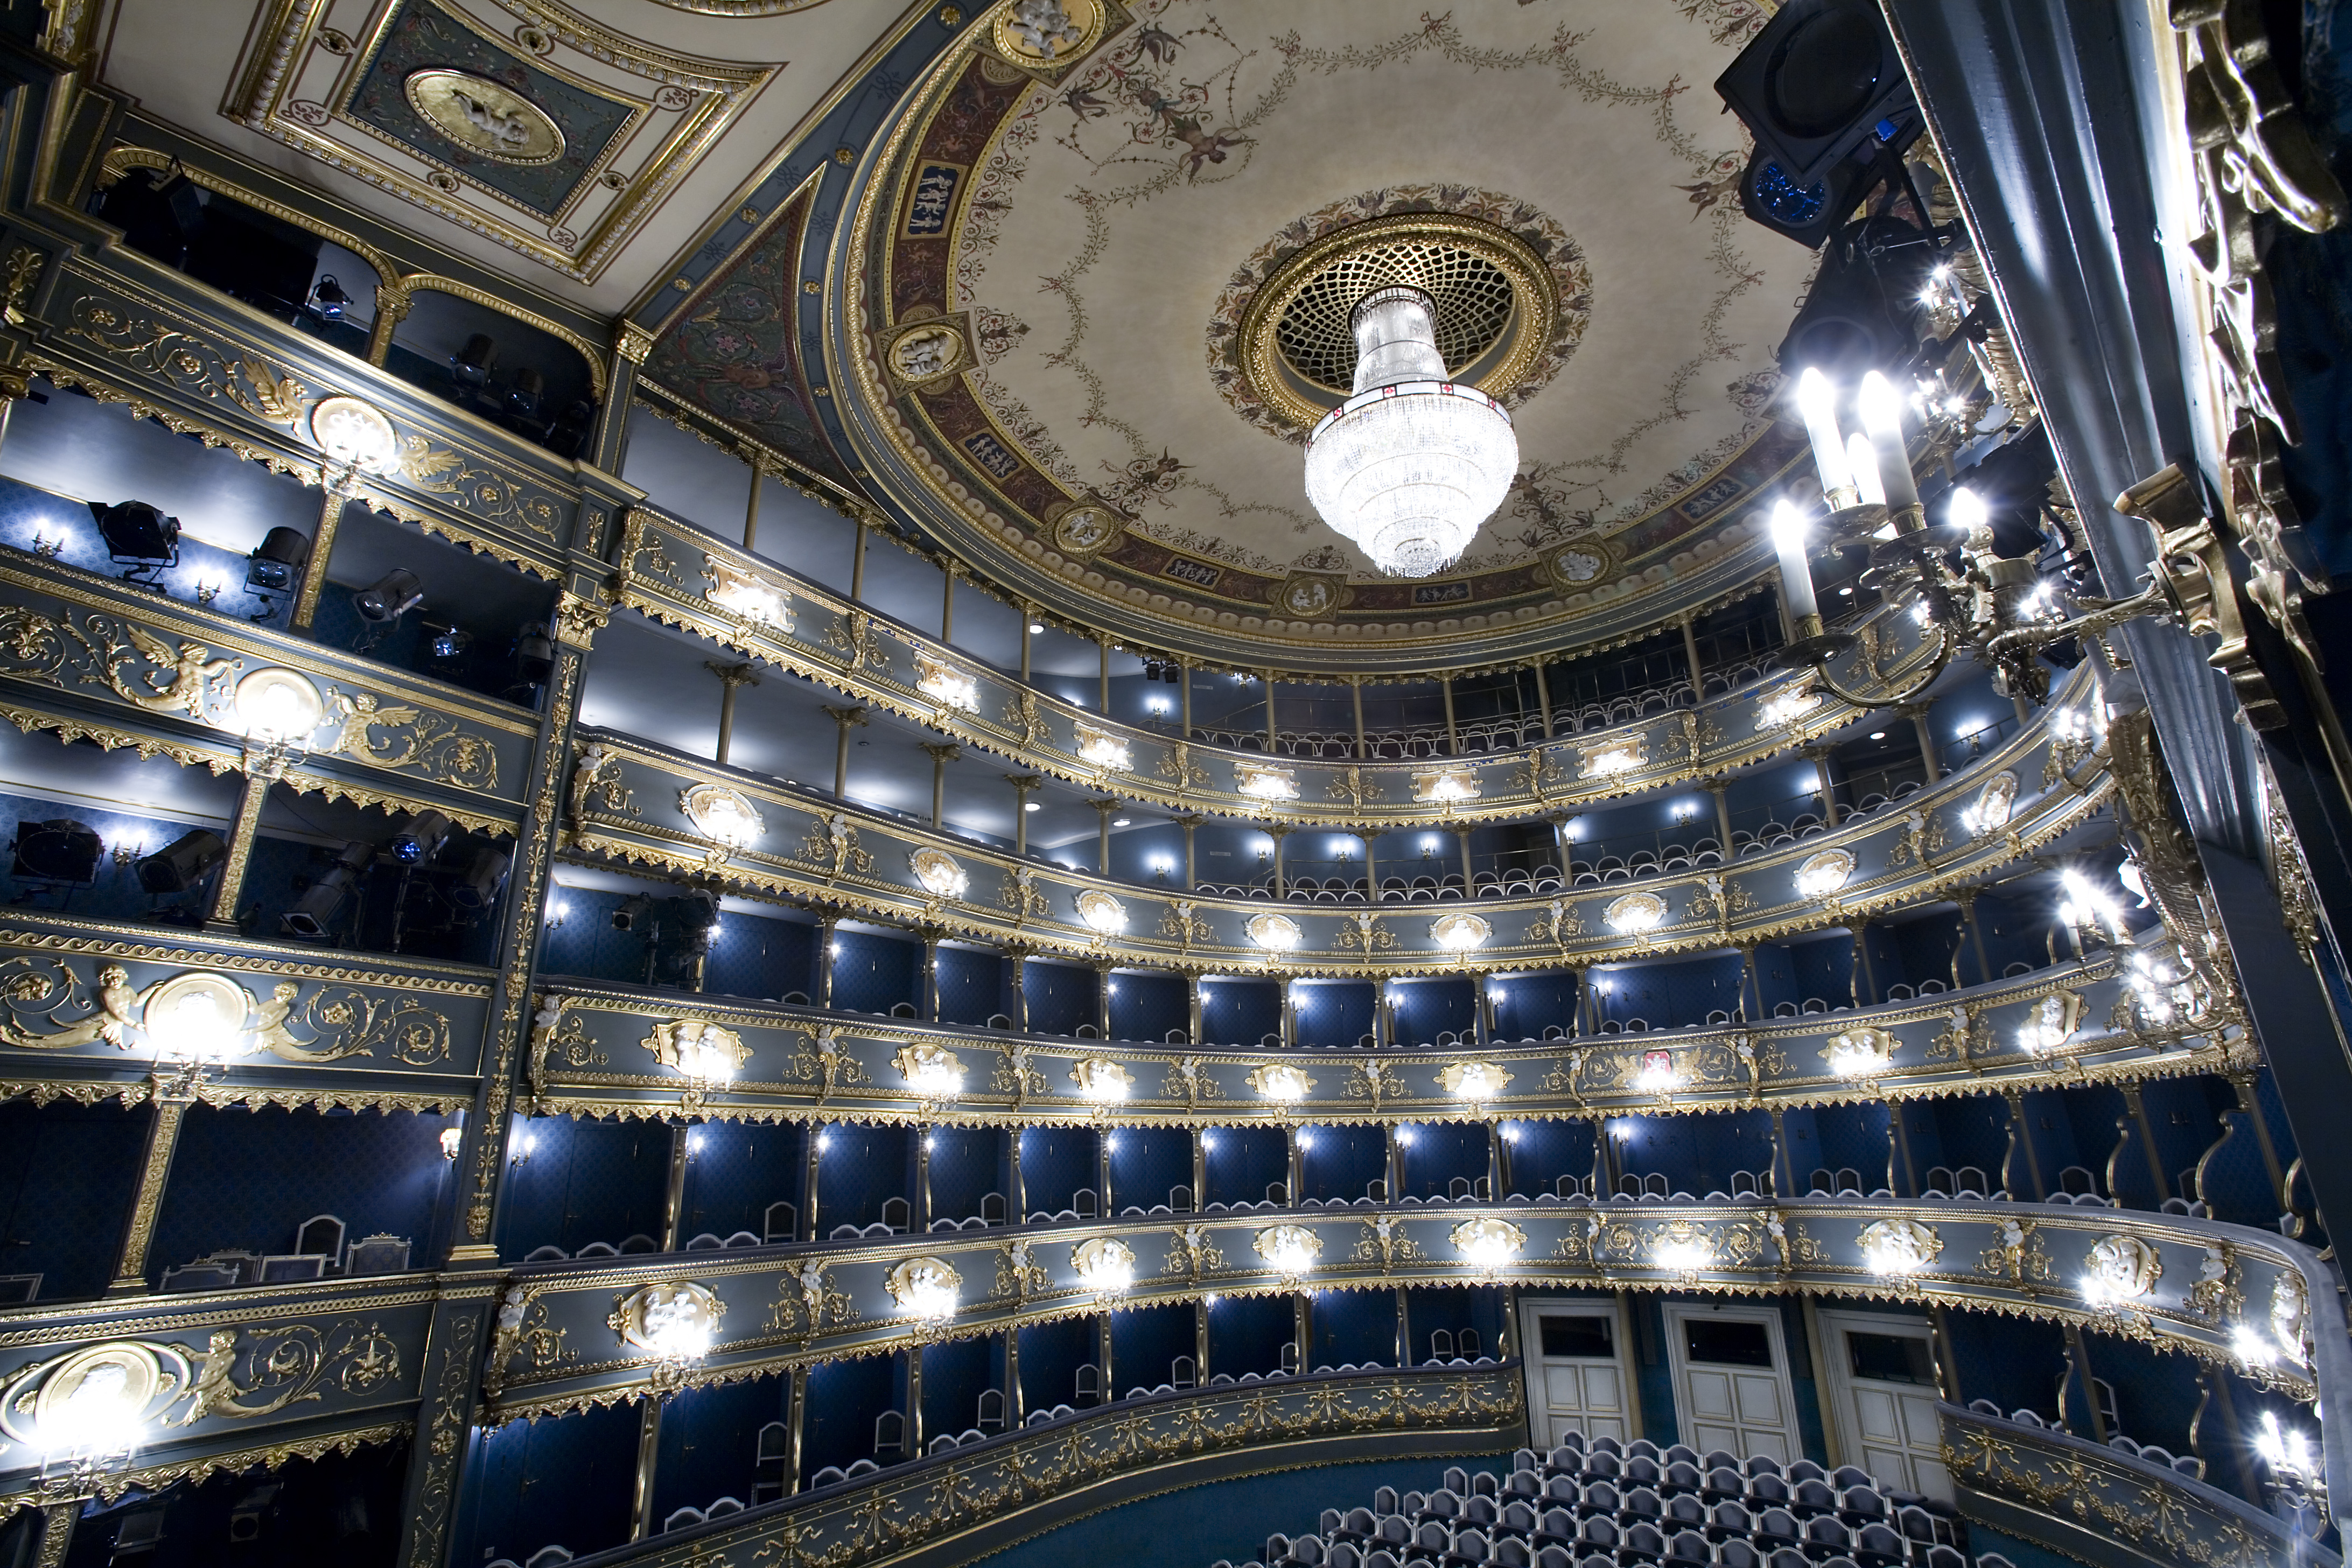 Narodni Divadlo, Estates Theater in Prague. Photography: Jorge Royan